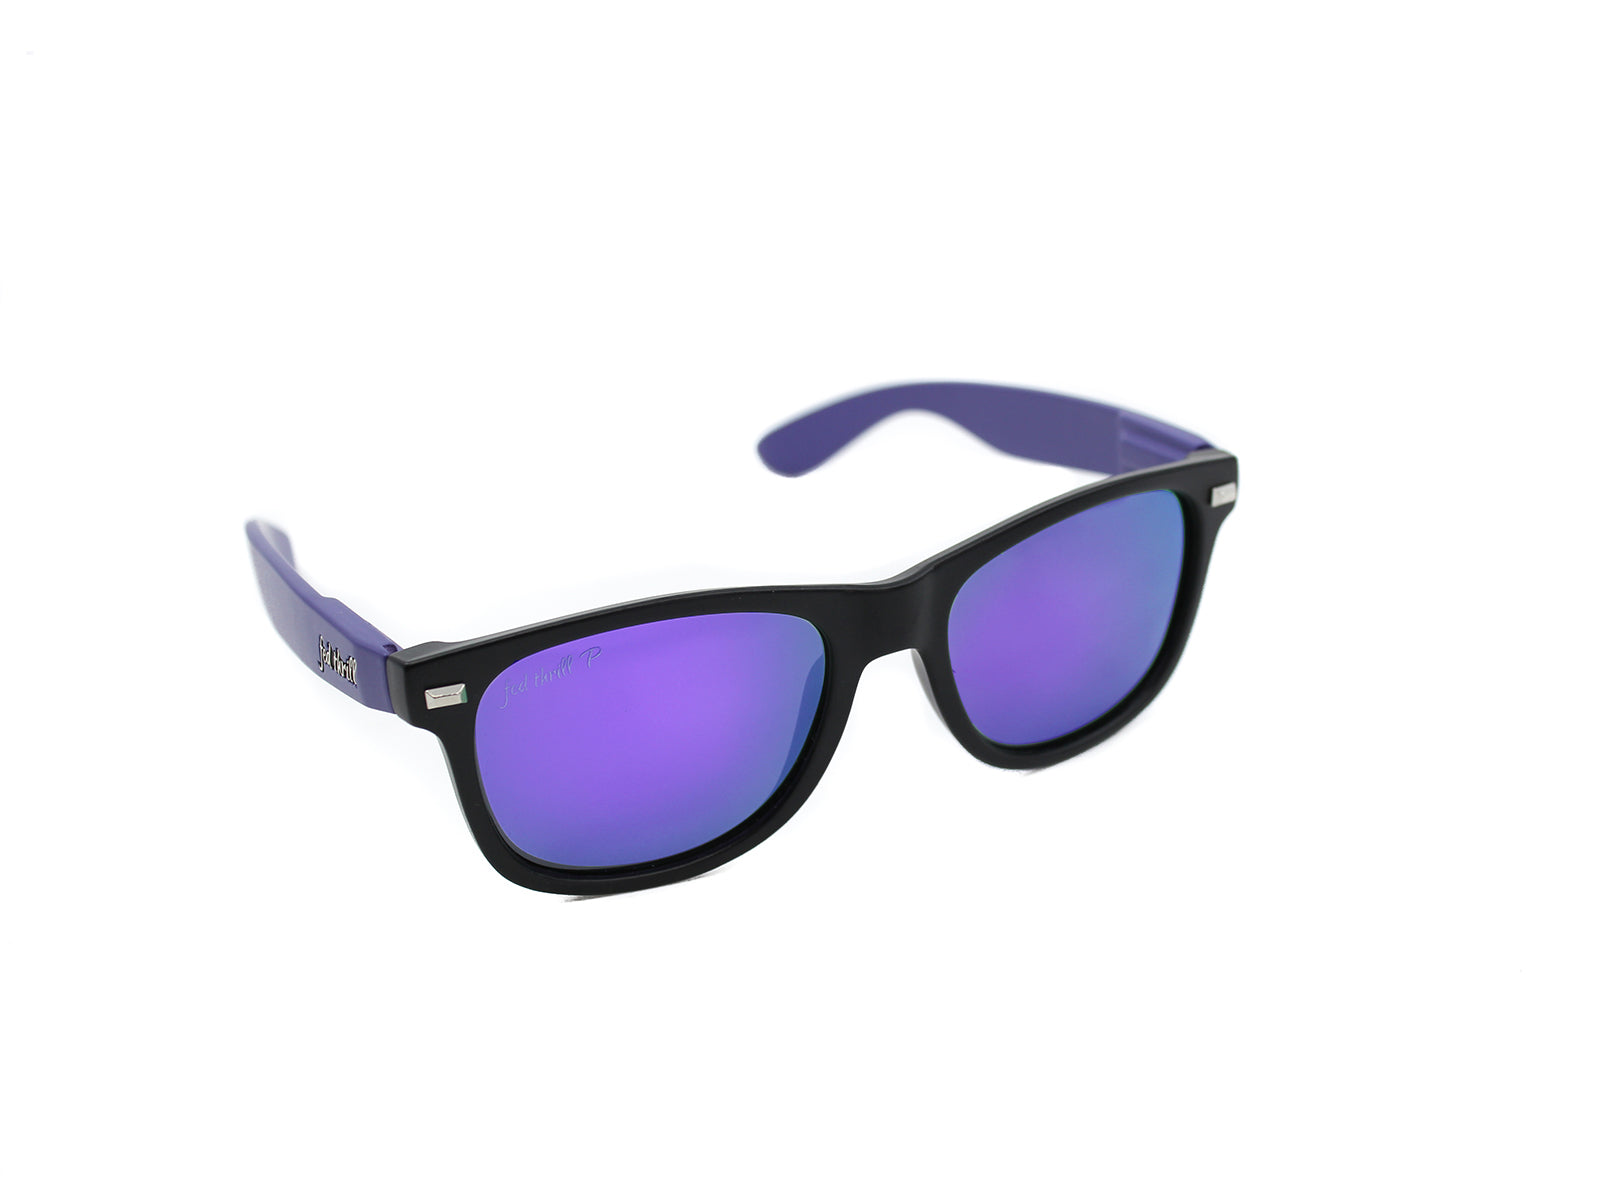 Buy Atom Purple Polarized & UV Protected Sunglasses Online for Men |  Eyewearlabs